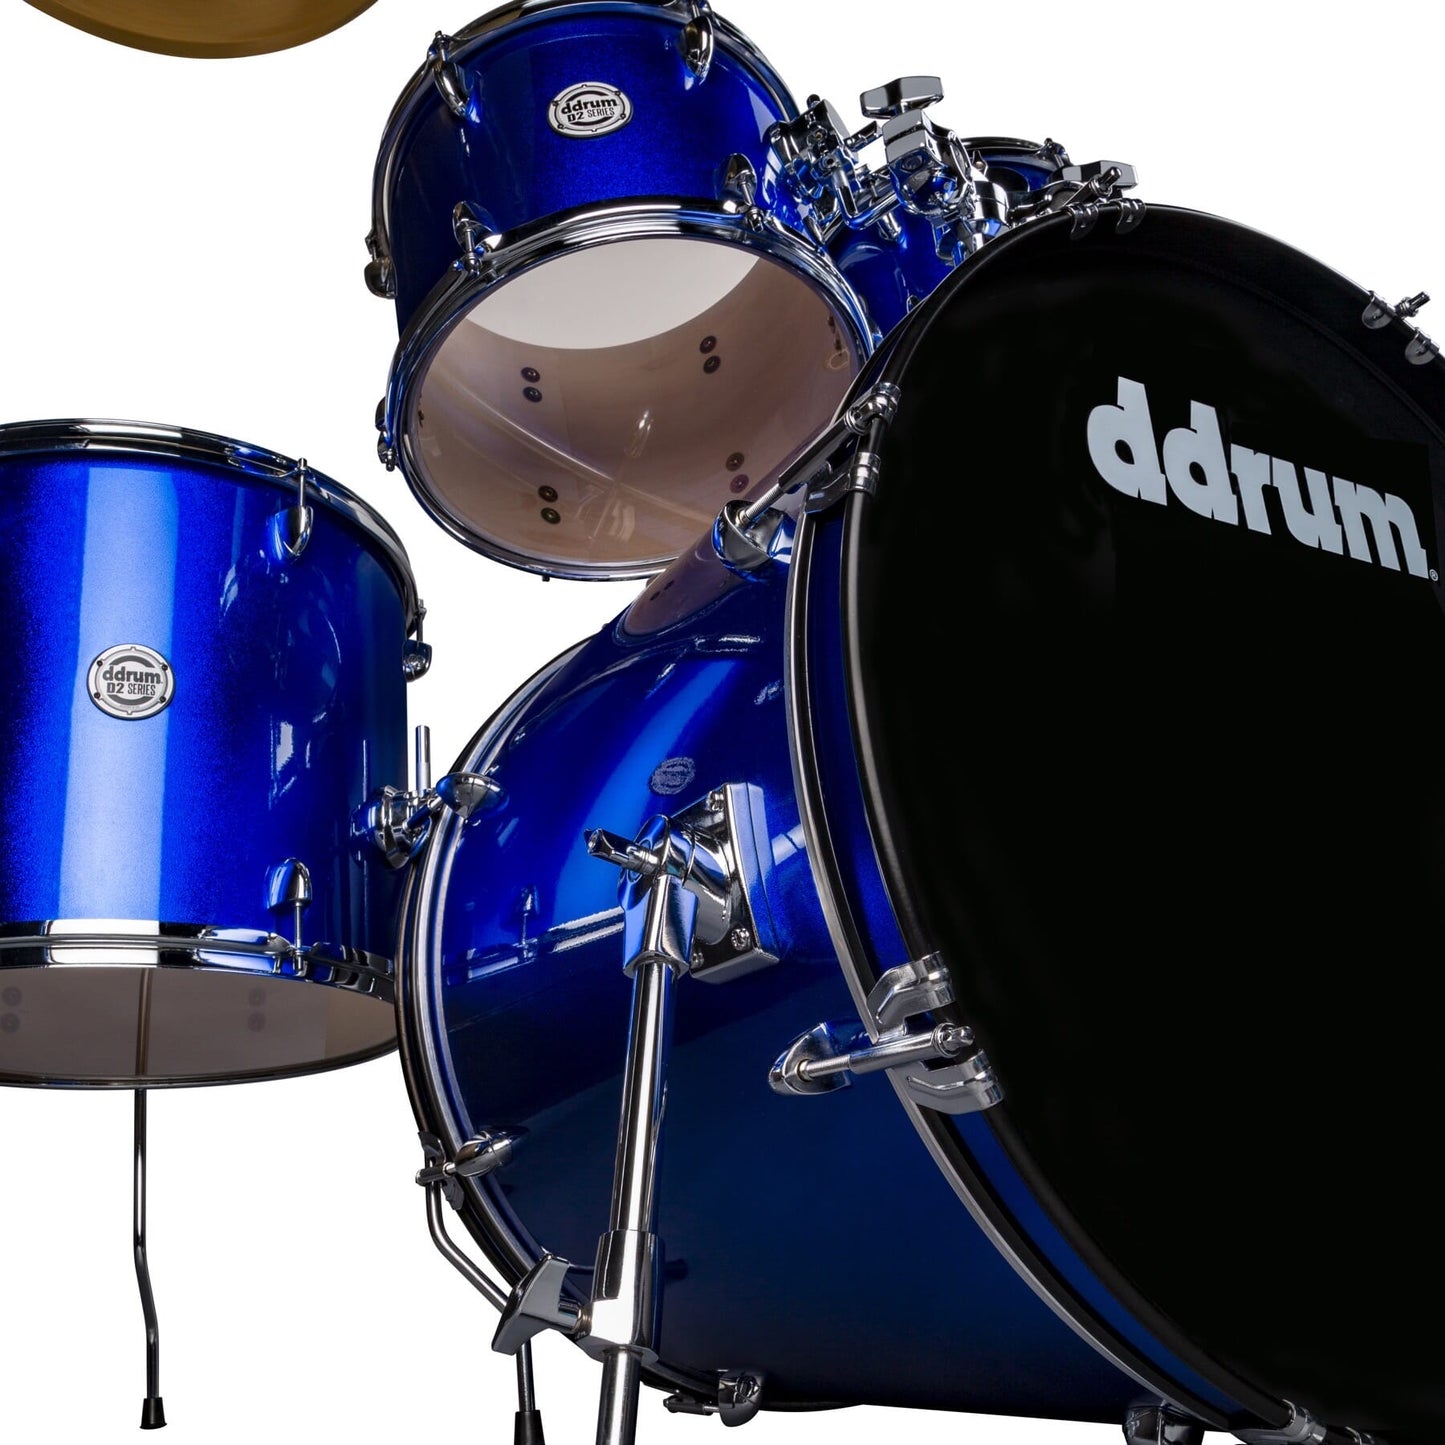 ddrum D2 522 5-Piece Complete Drum Set in Cobalt Blue